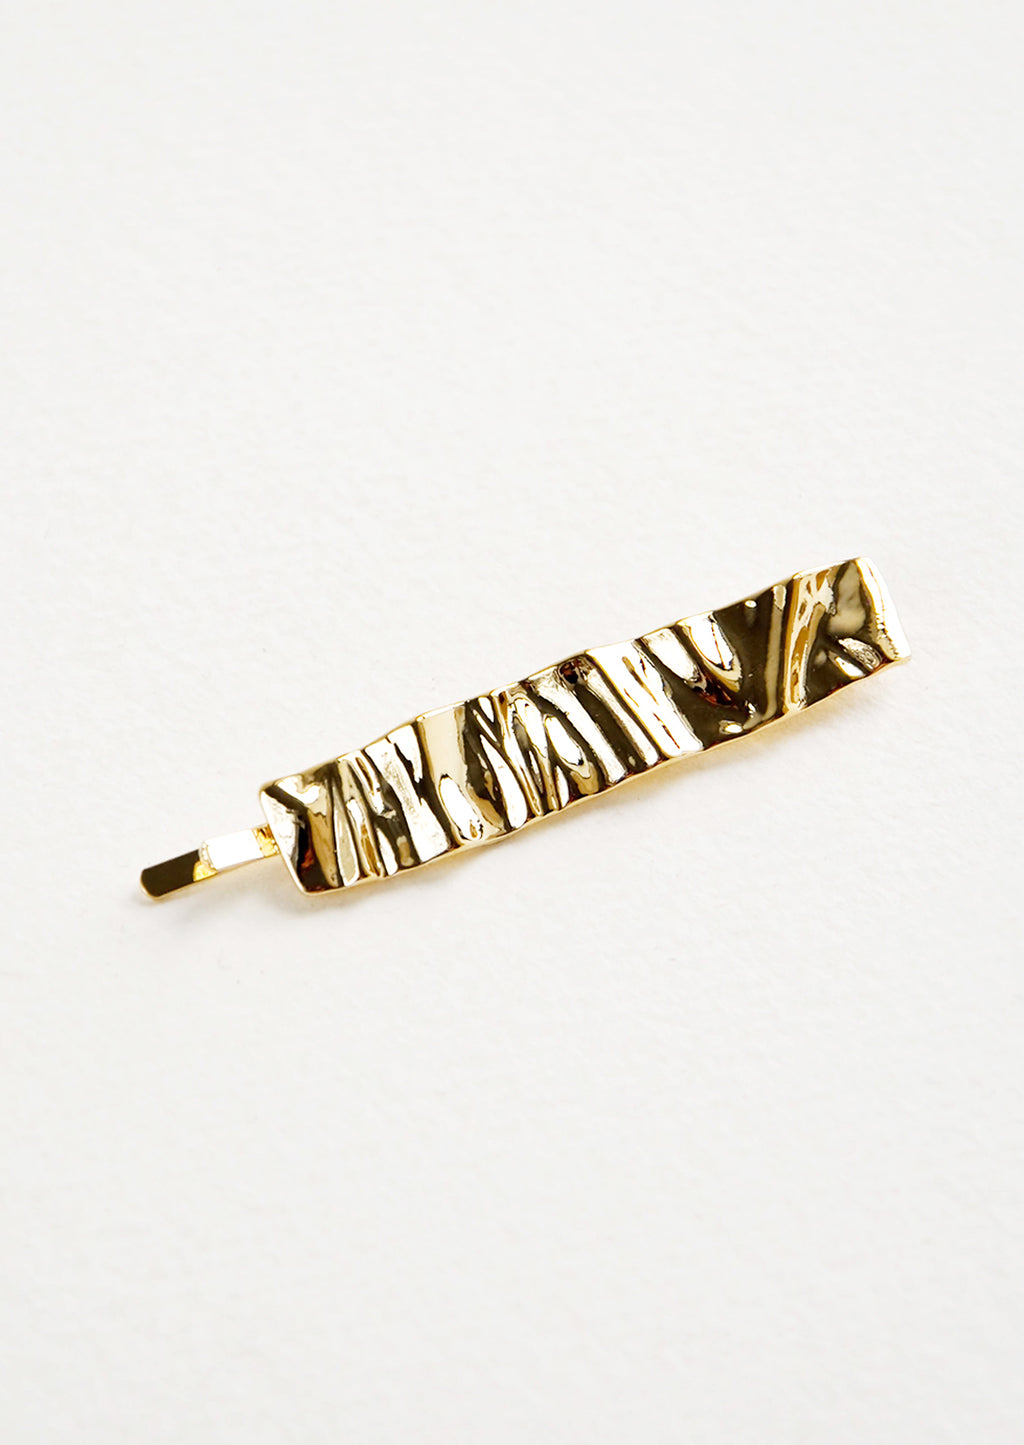 1: Textured gold metallic rectangular hair clip